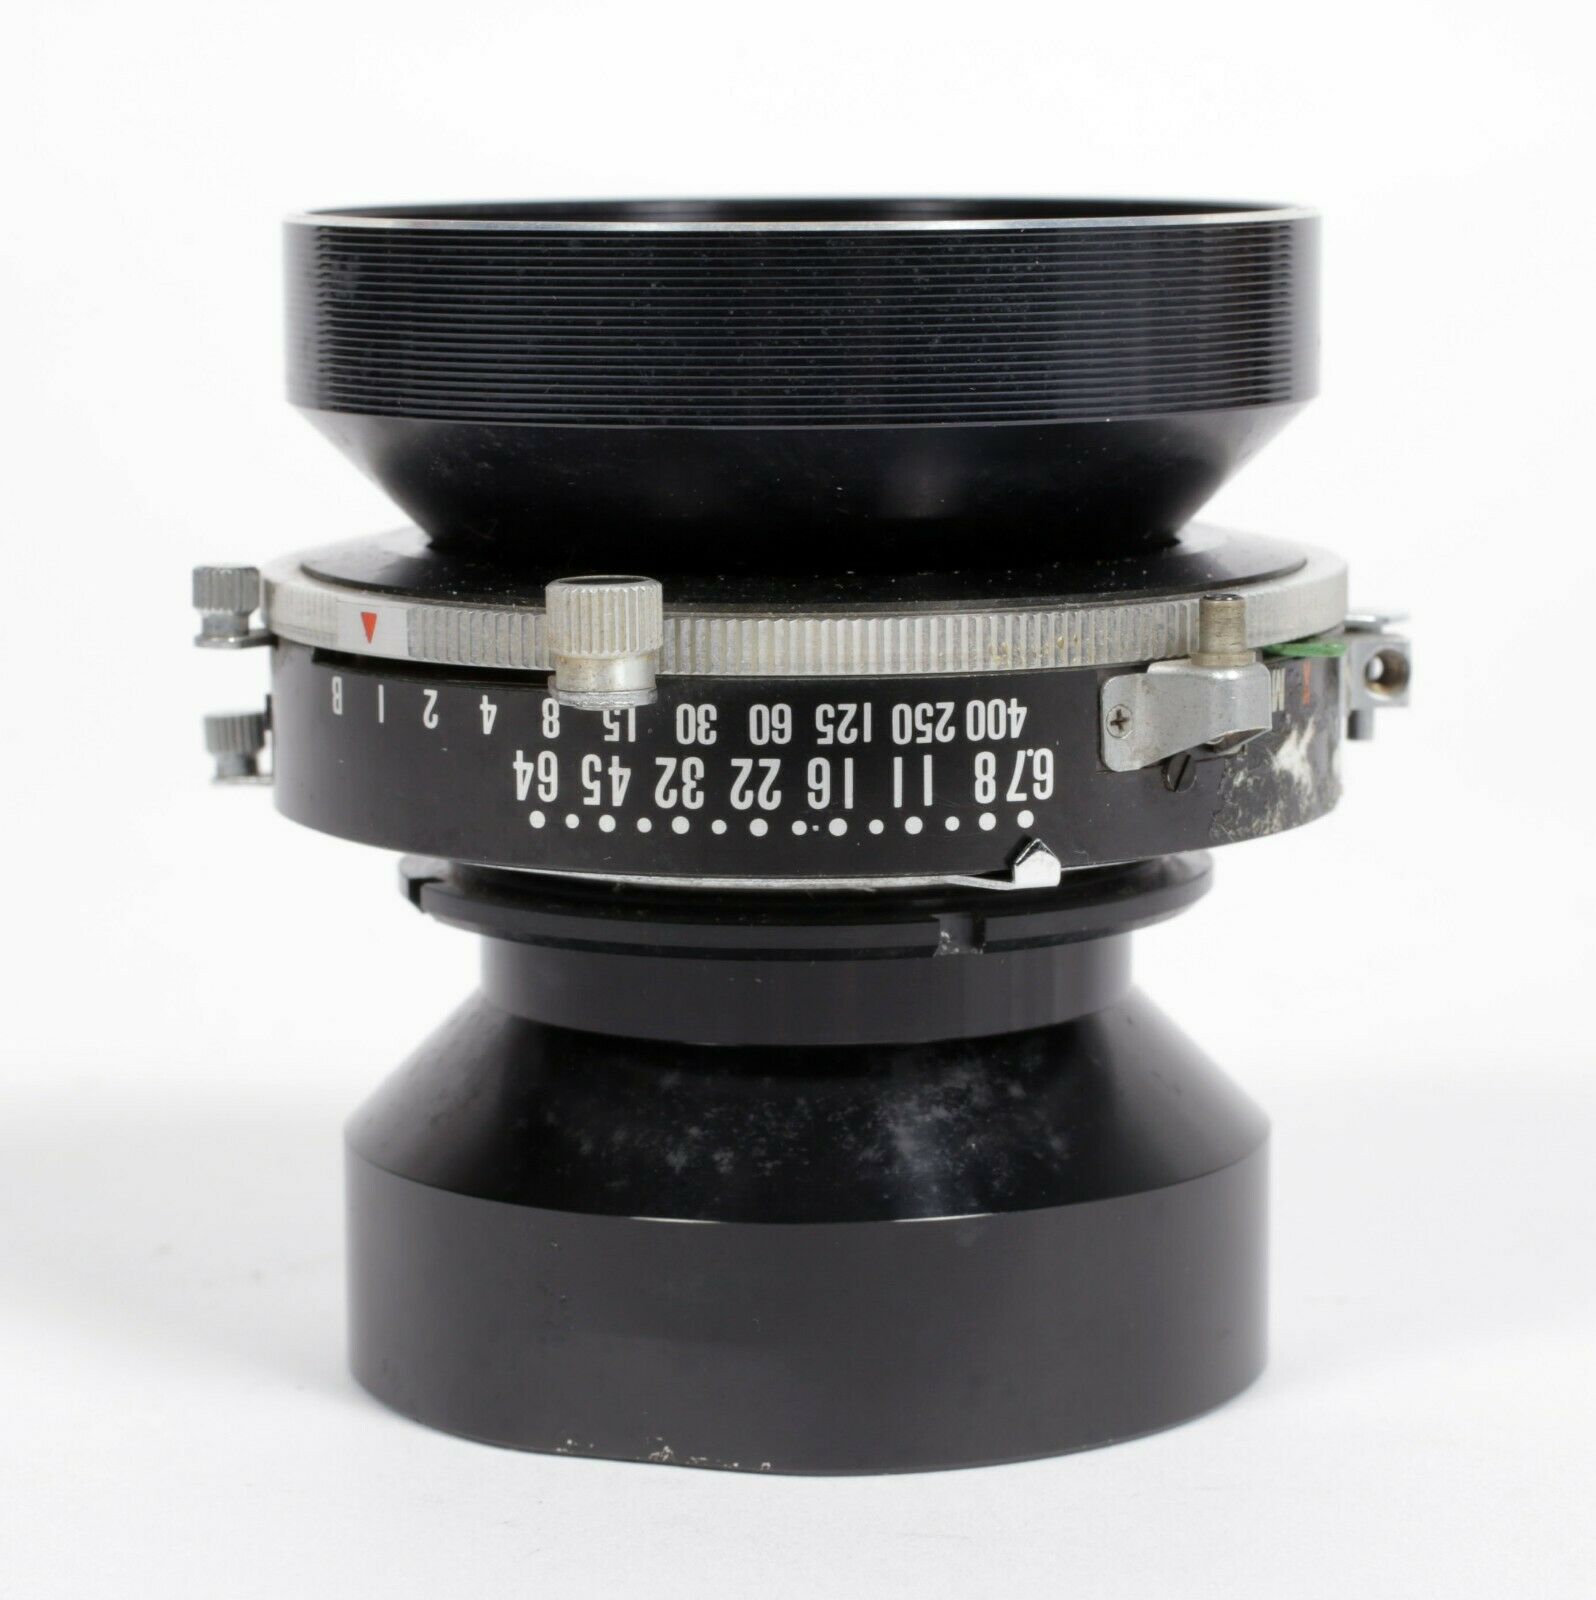 Fuji Fujinon WS 250mm F6.7 Lens in Seiko #1 (Covers 8X10) 